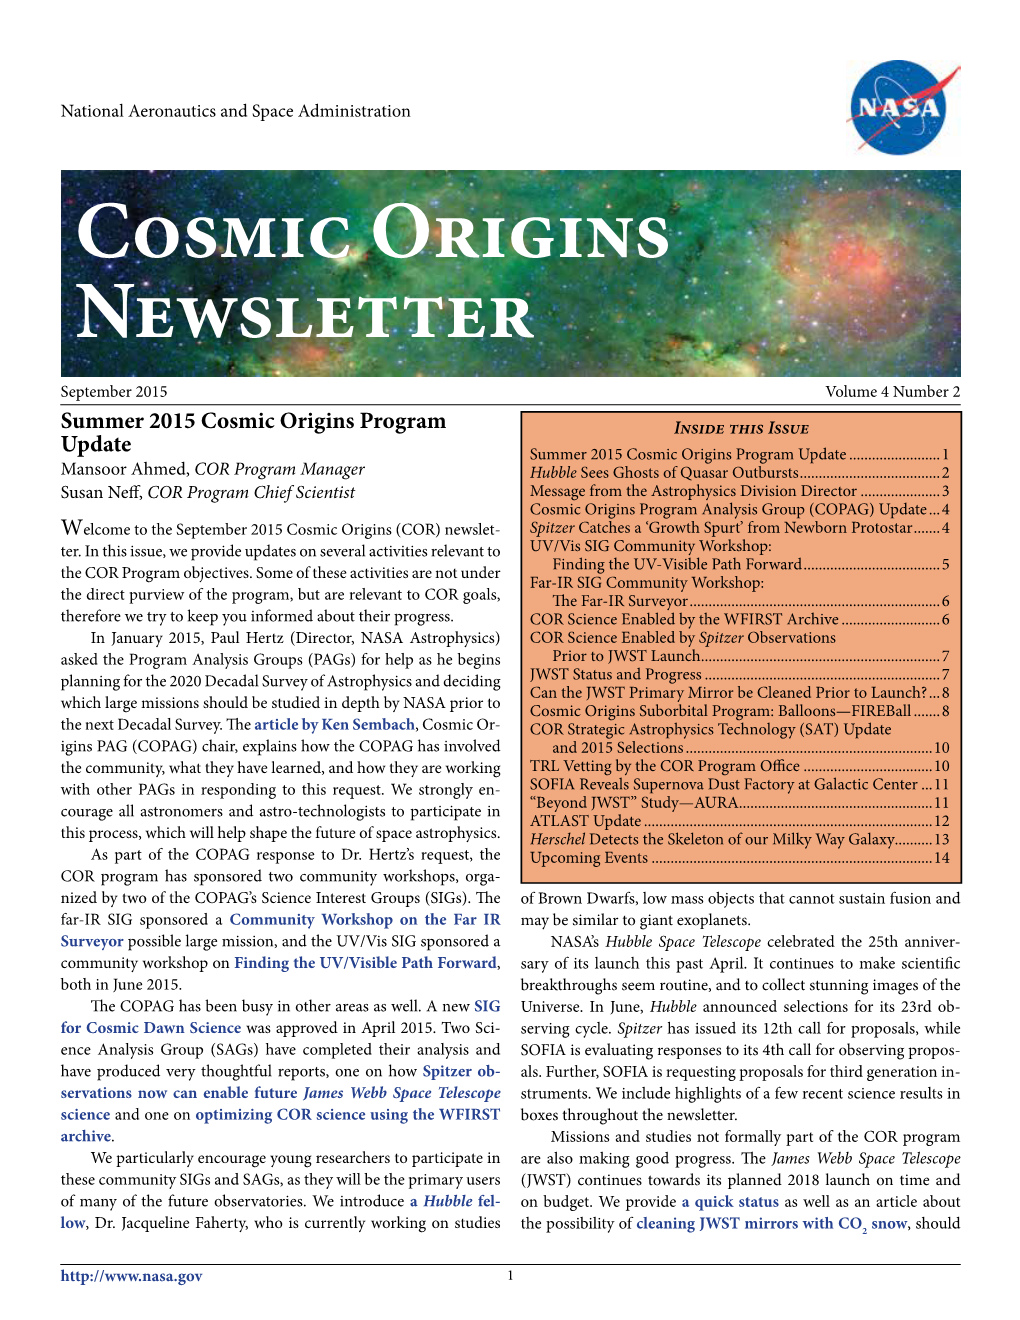 Cosmic Origins Newsletter, September 2015, Vol. 4, No. 2